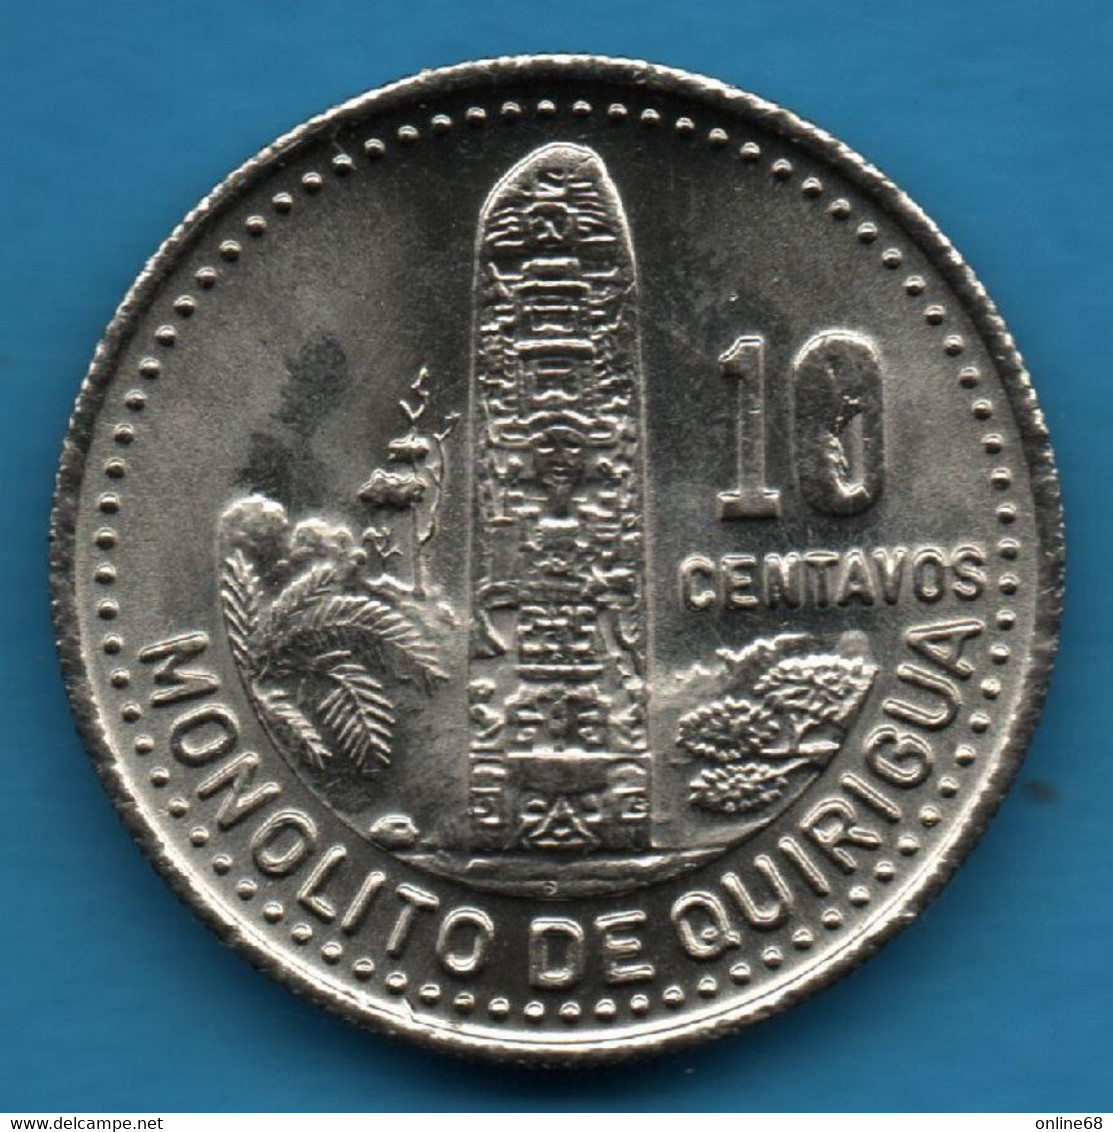 GUATEMALA 10 CENTAVOS 1990 KM# 277 MONOLITO DE QUIRIGUA - Guatemala